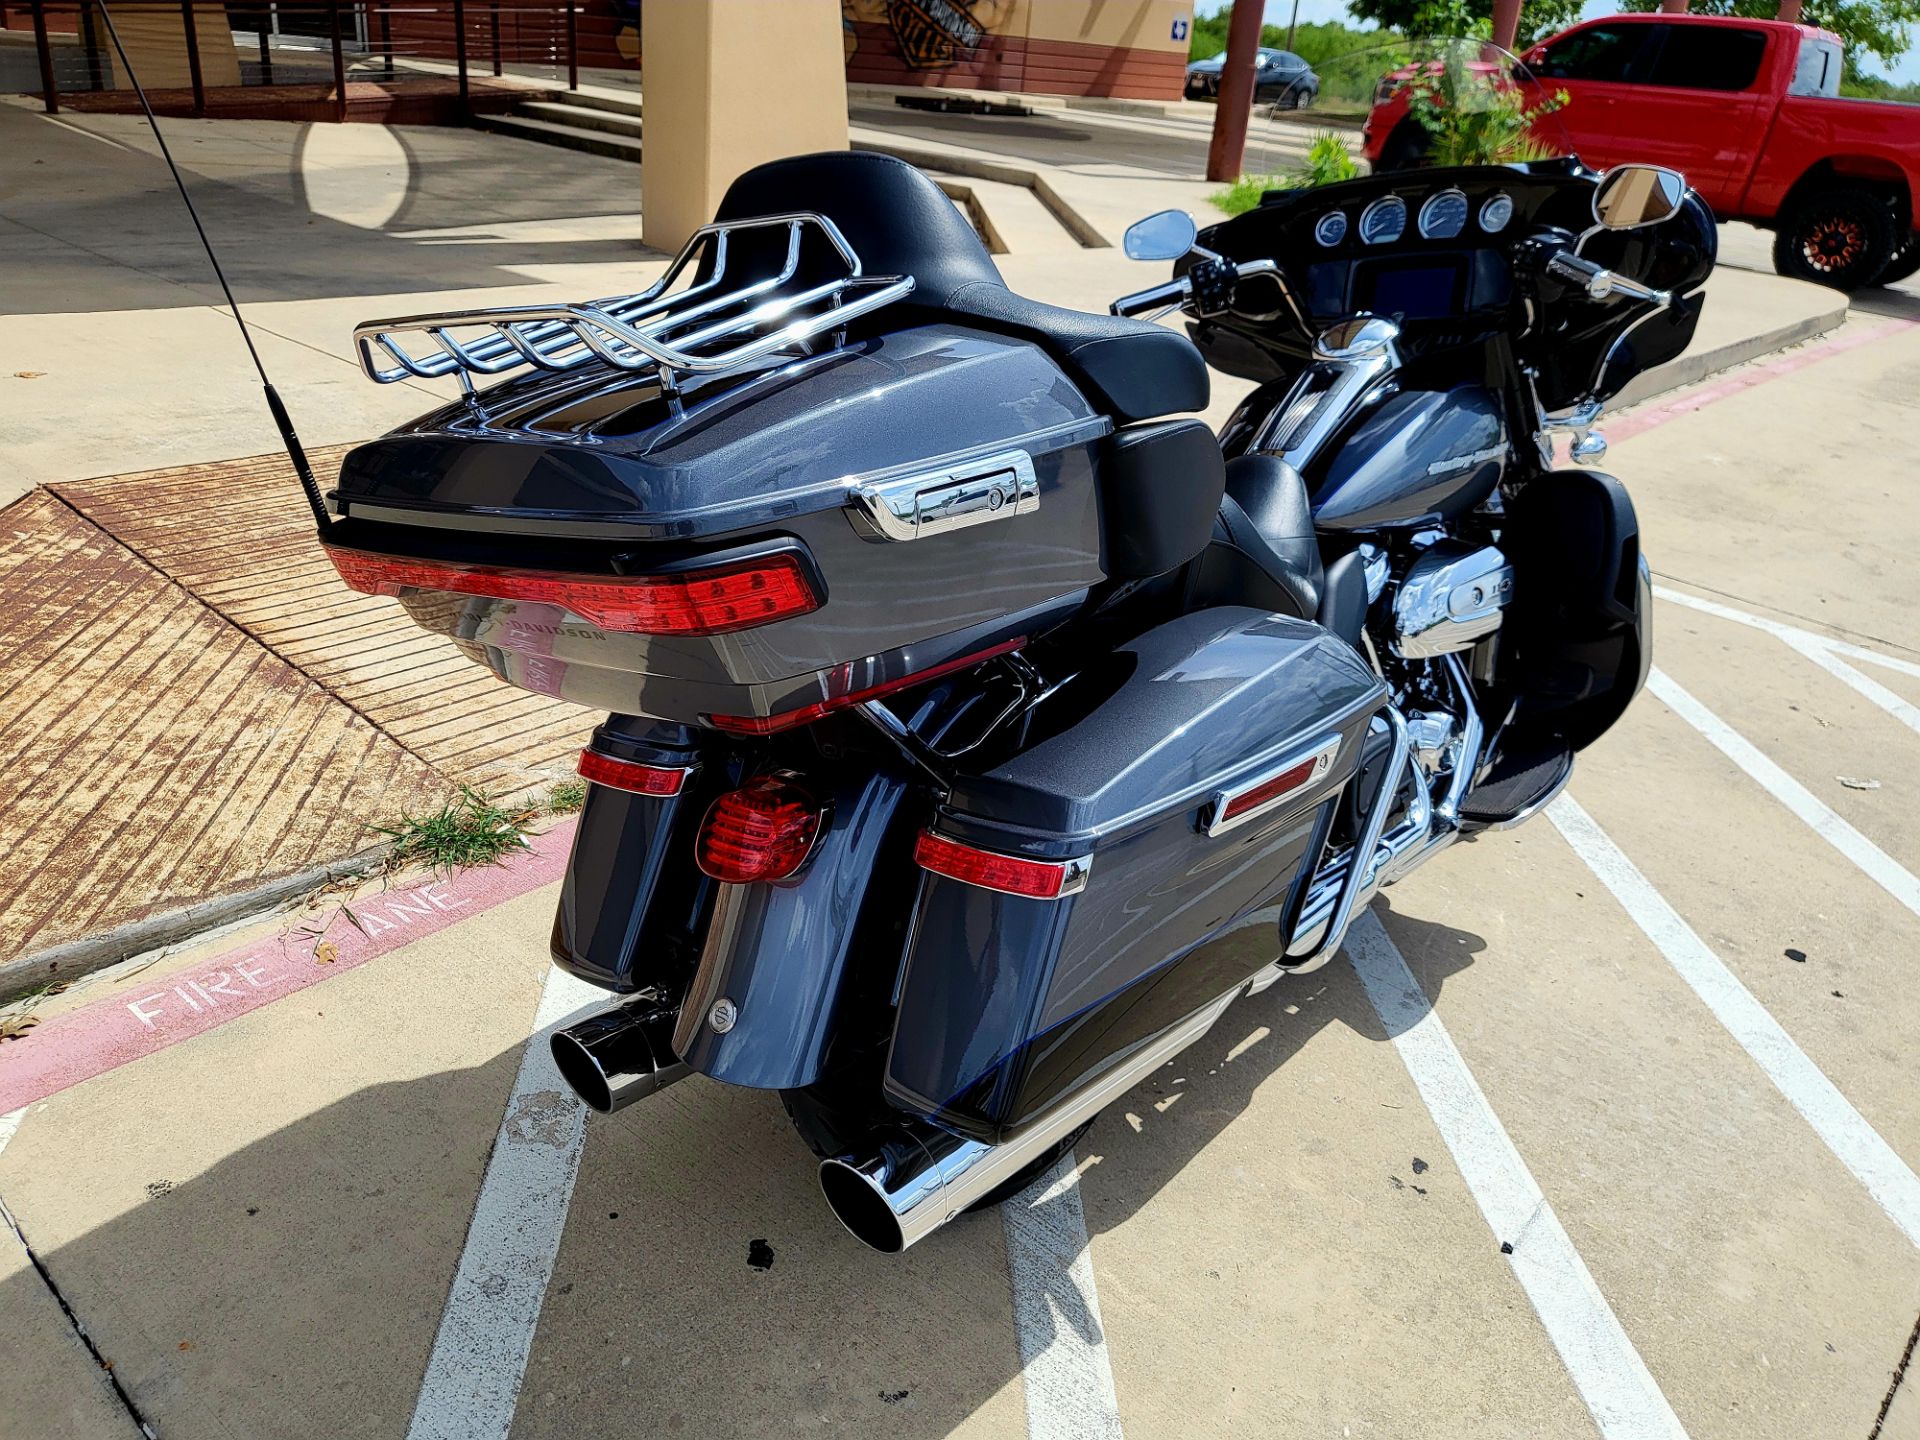 2021 Harley-Davidson Ultra Limited in San Antonio, Texas - Photo 8